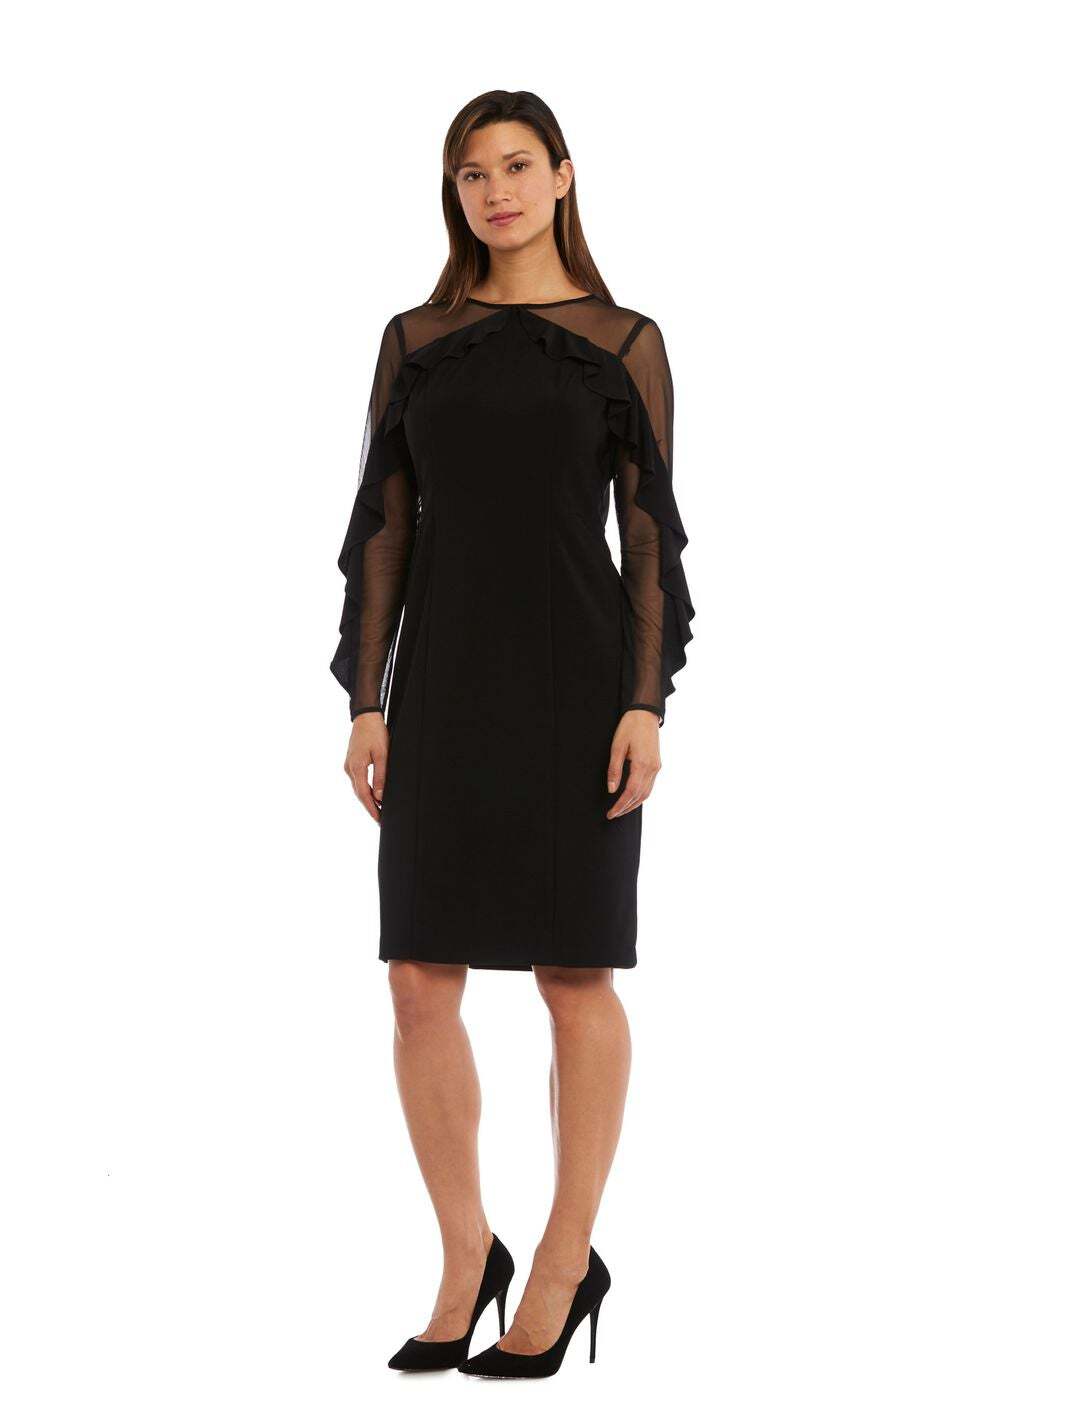 knee-length black dress with sheer detail